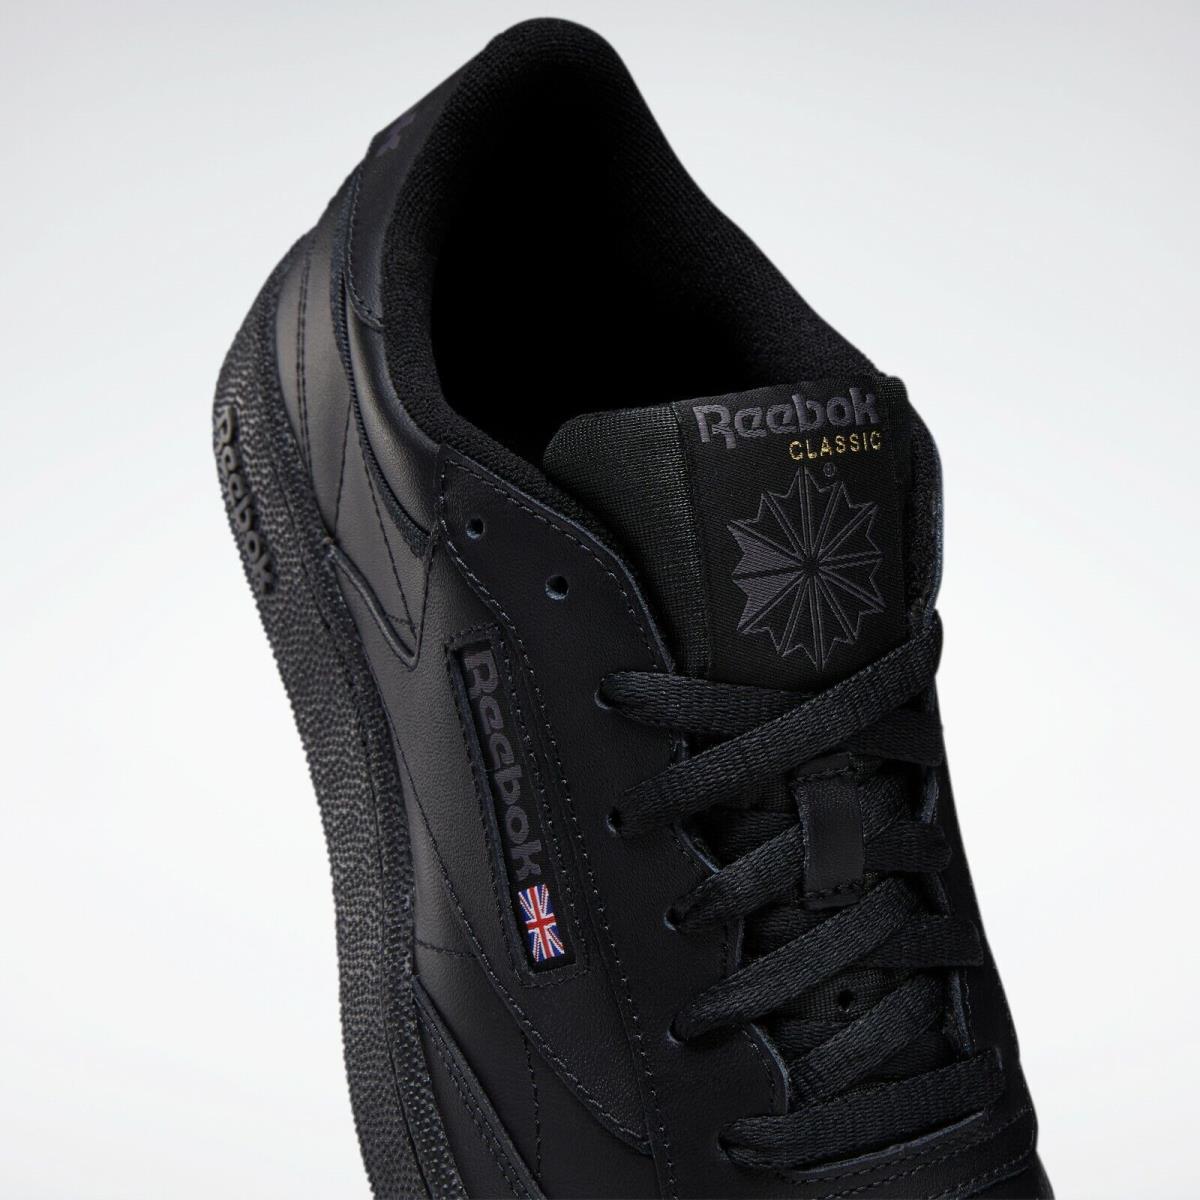 Reebok shoes Classic - Black 5